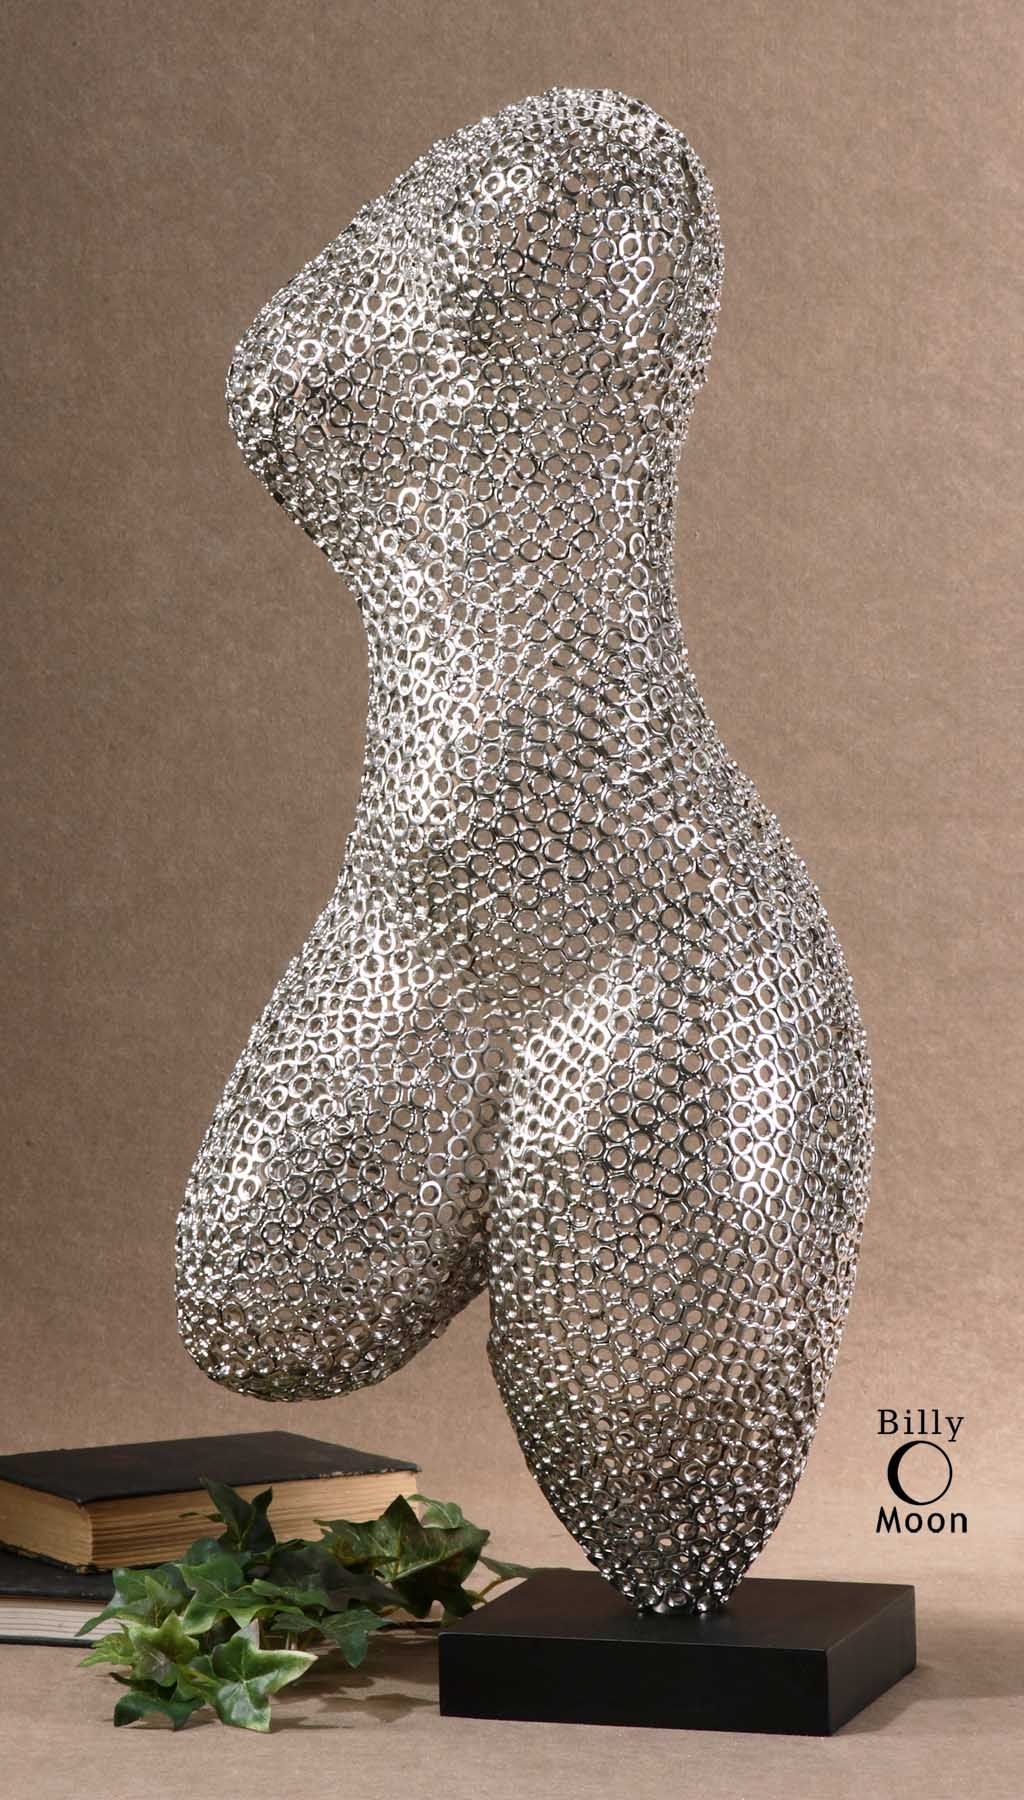 Hera Nickel Plated Sculpture - Image 0